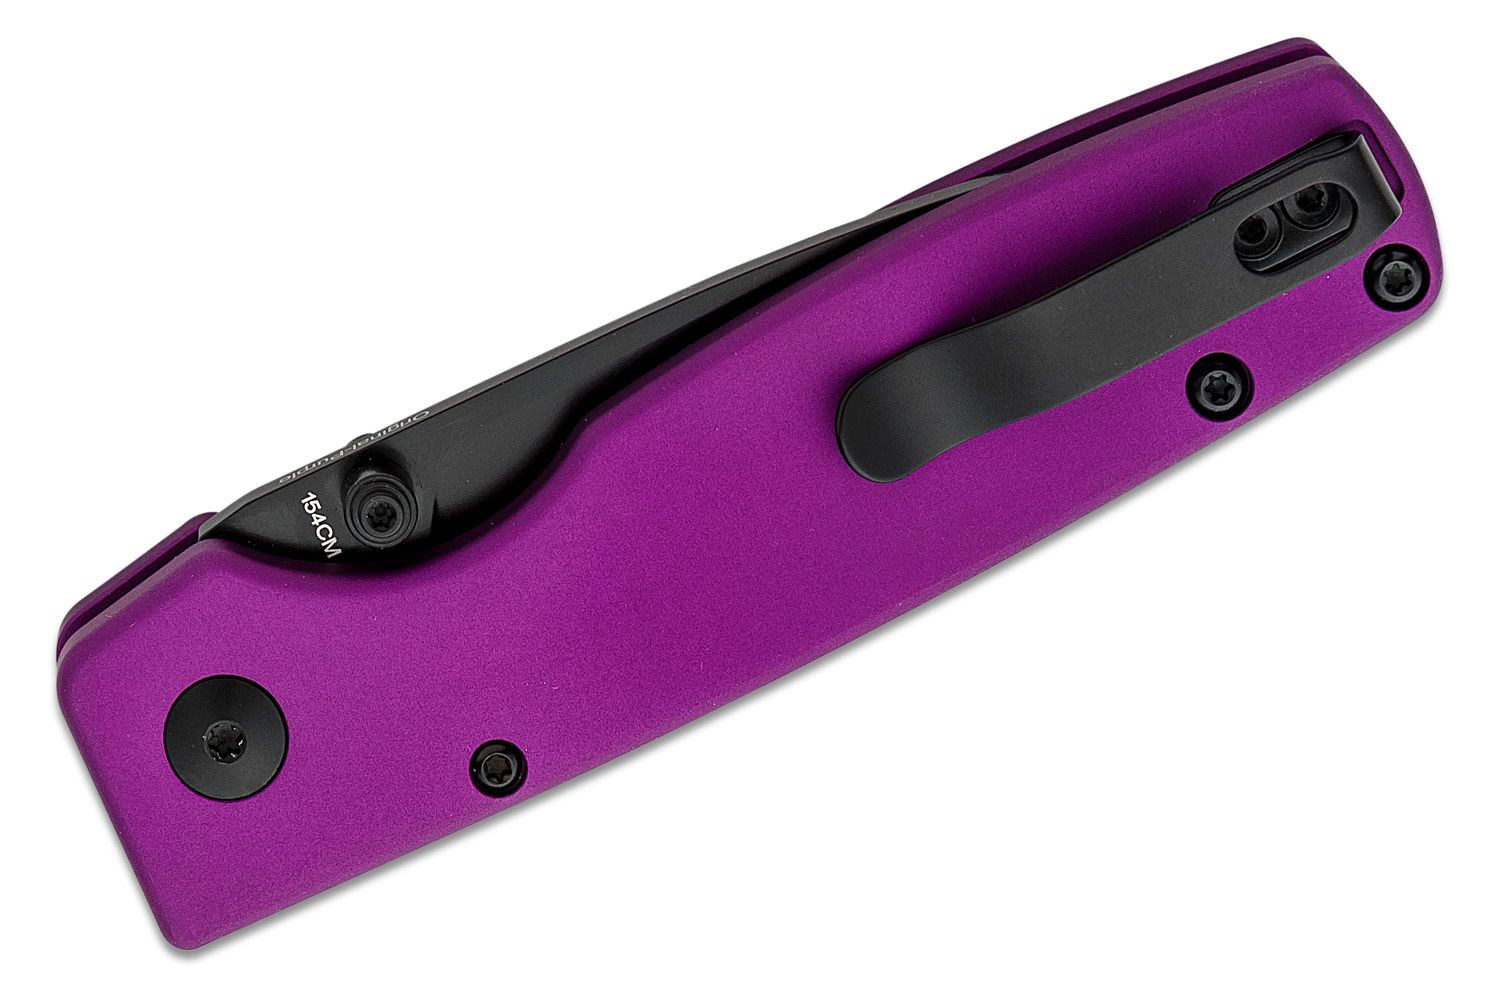  Kizer Original Folding Knife 3 Inches, 154CM Steel Blade Purple  Aluminum Handle EDC Pocket Knives 3605C4 : Tools & Home Improvement